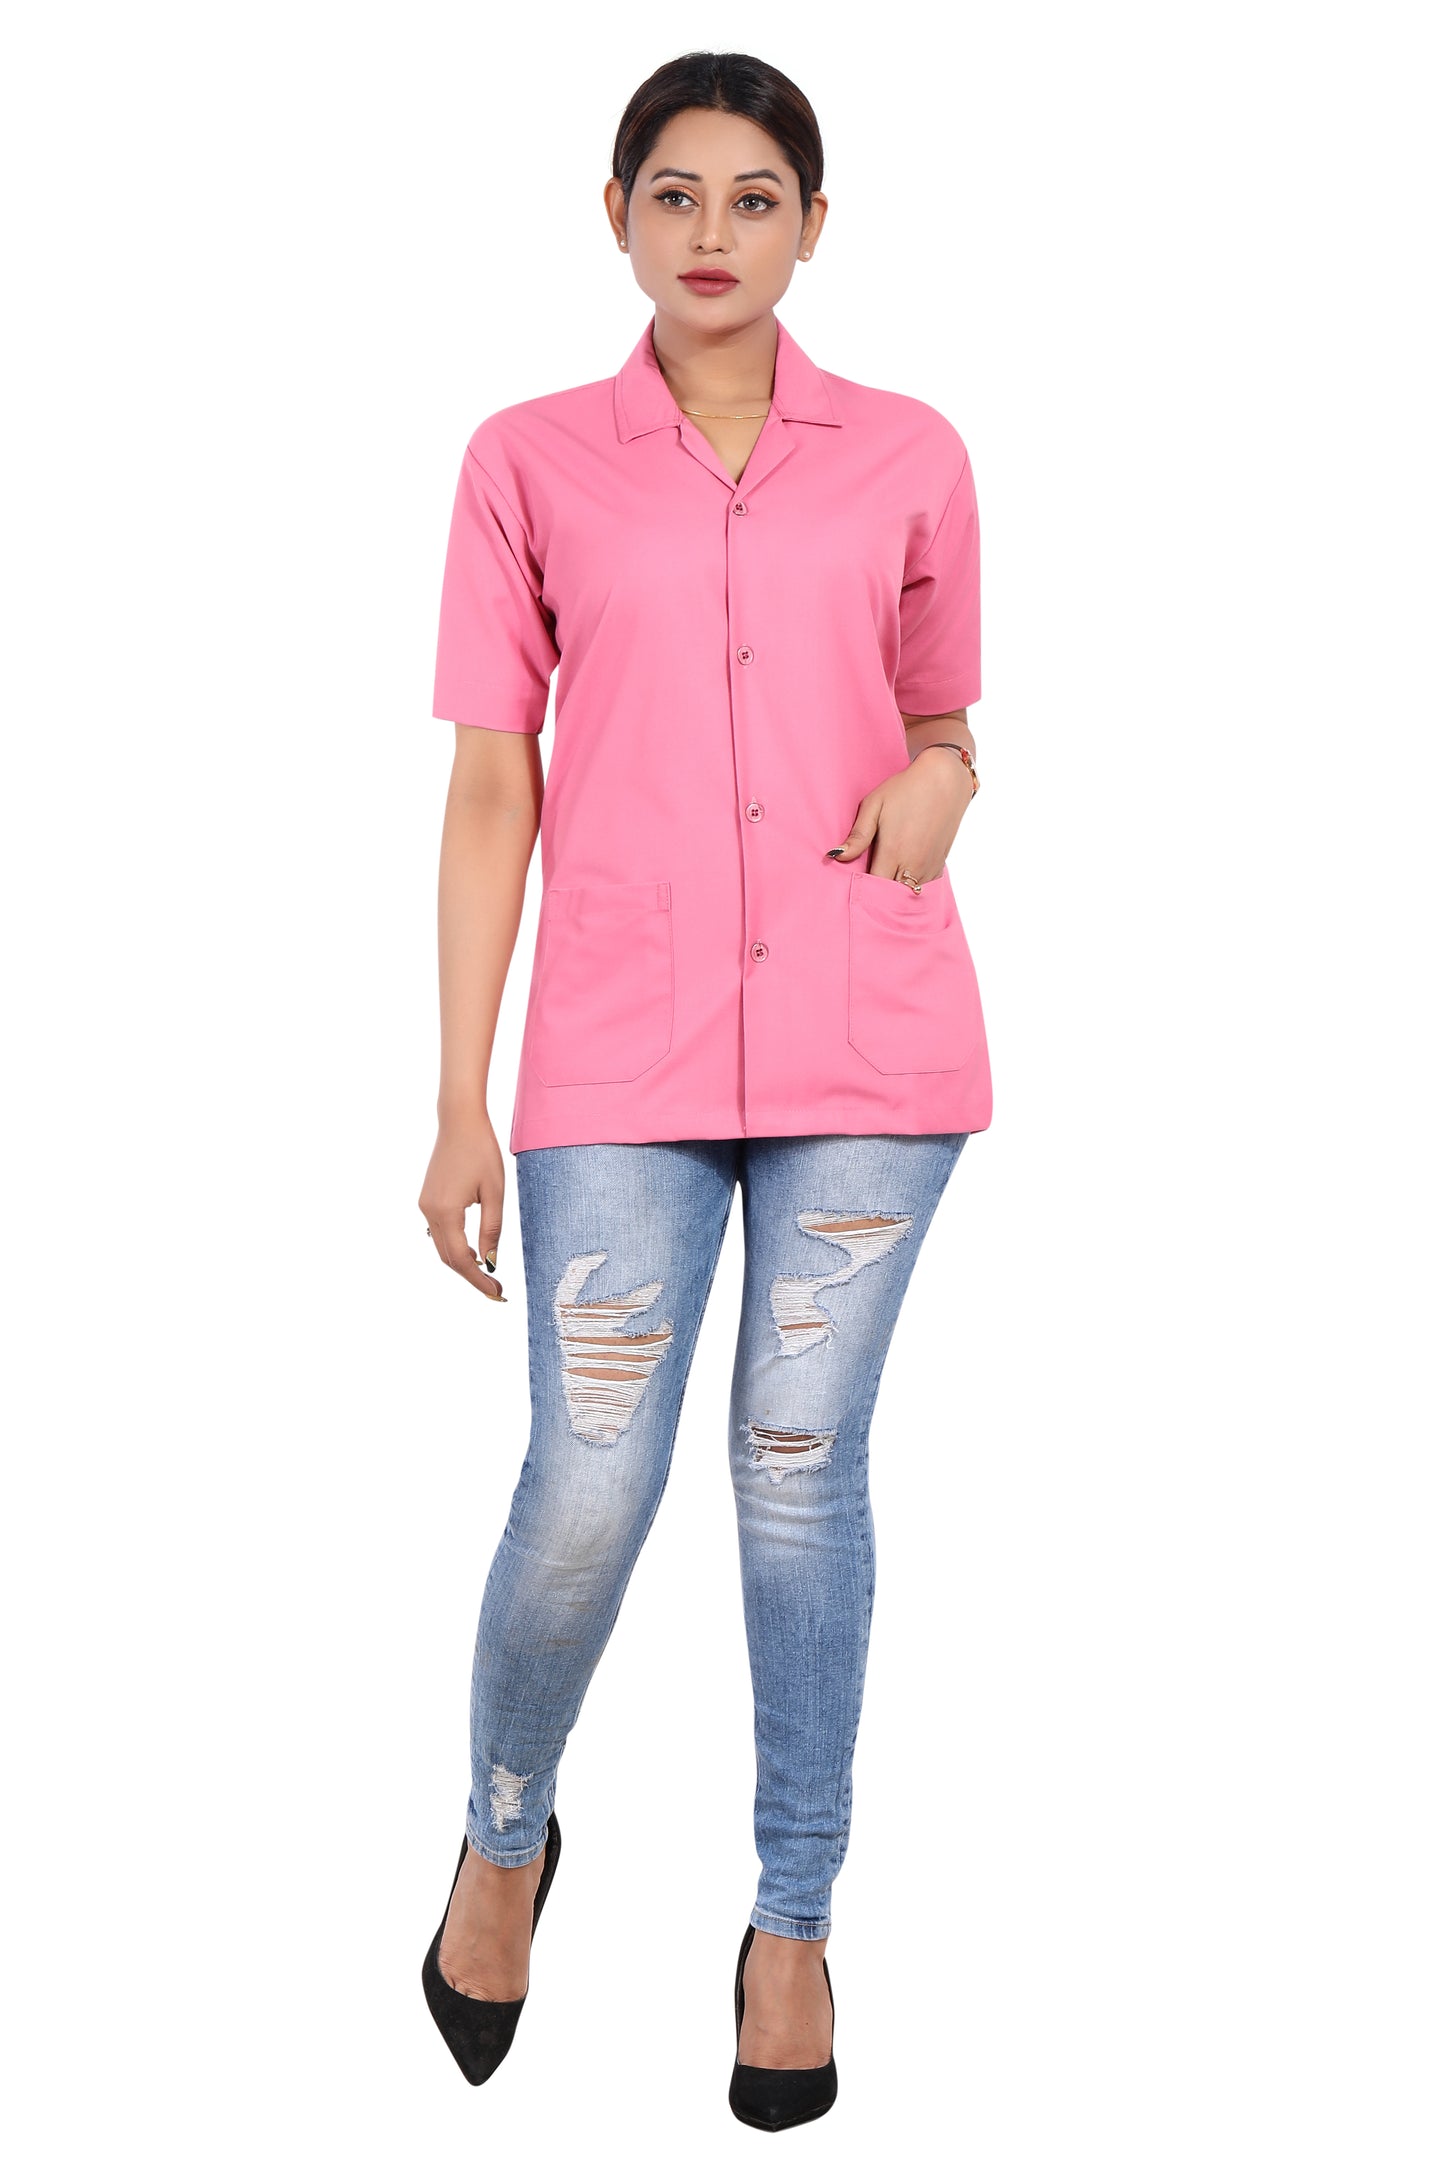 Cotton Unisex Apron Lab Coat - Regular Length - Half Sleeves - Pink